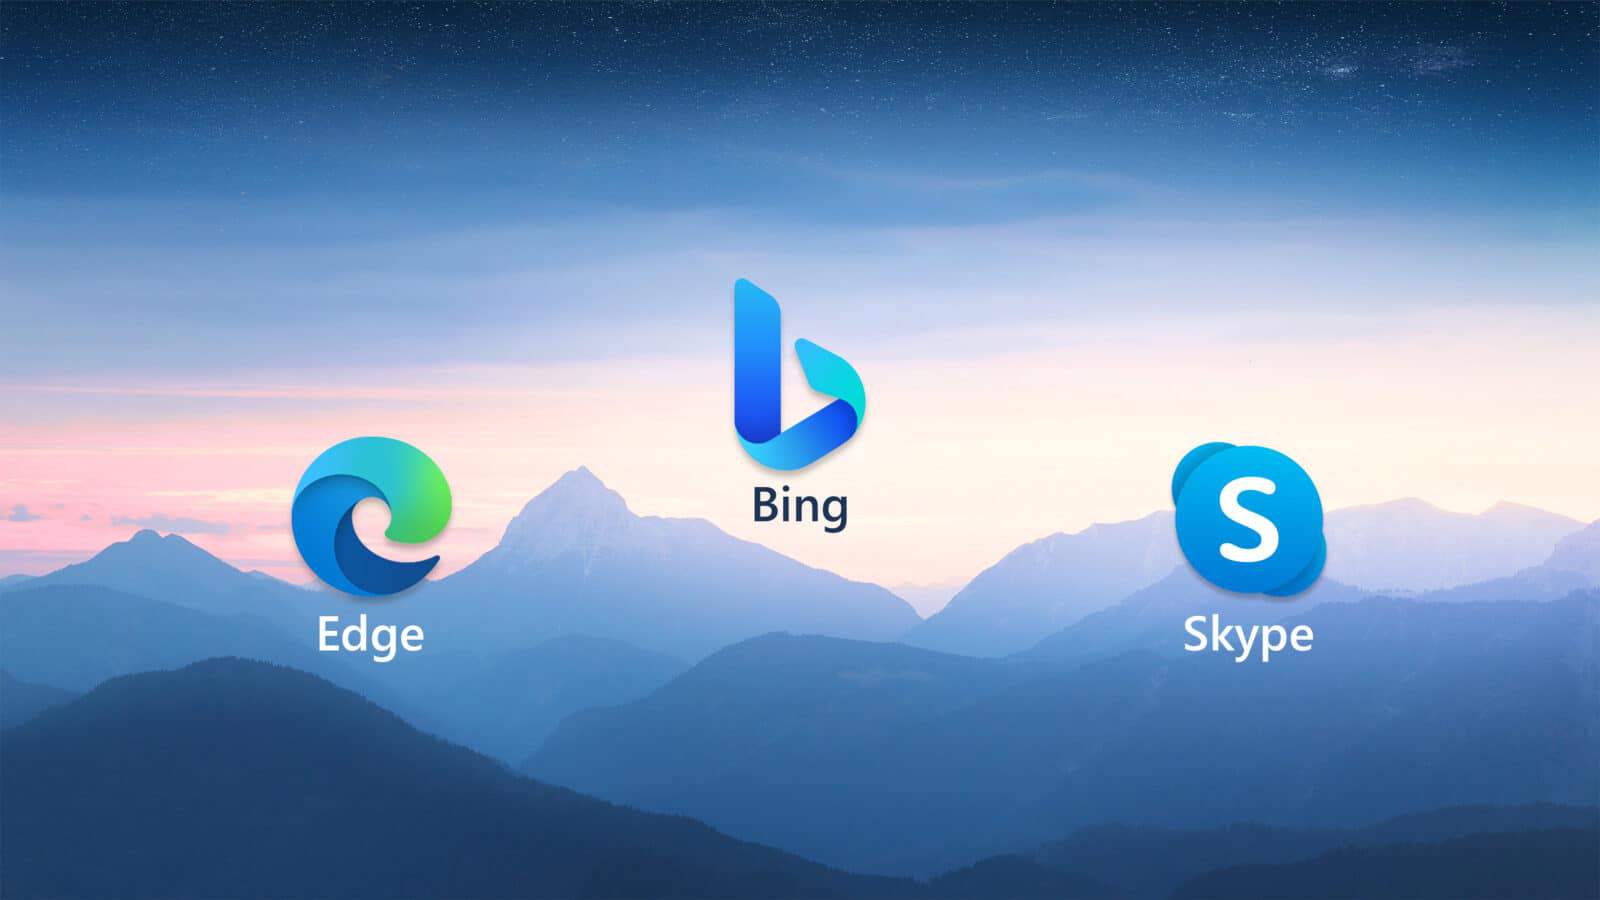 edge bing skype